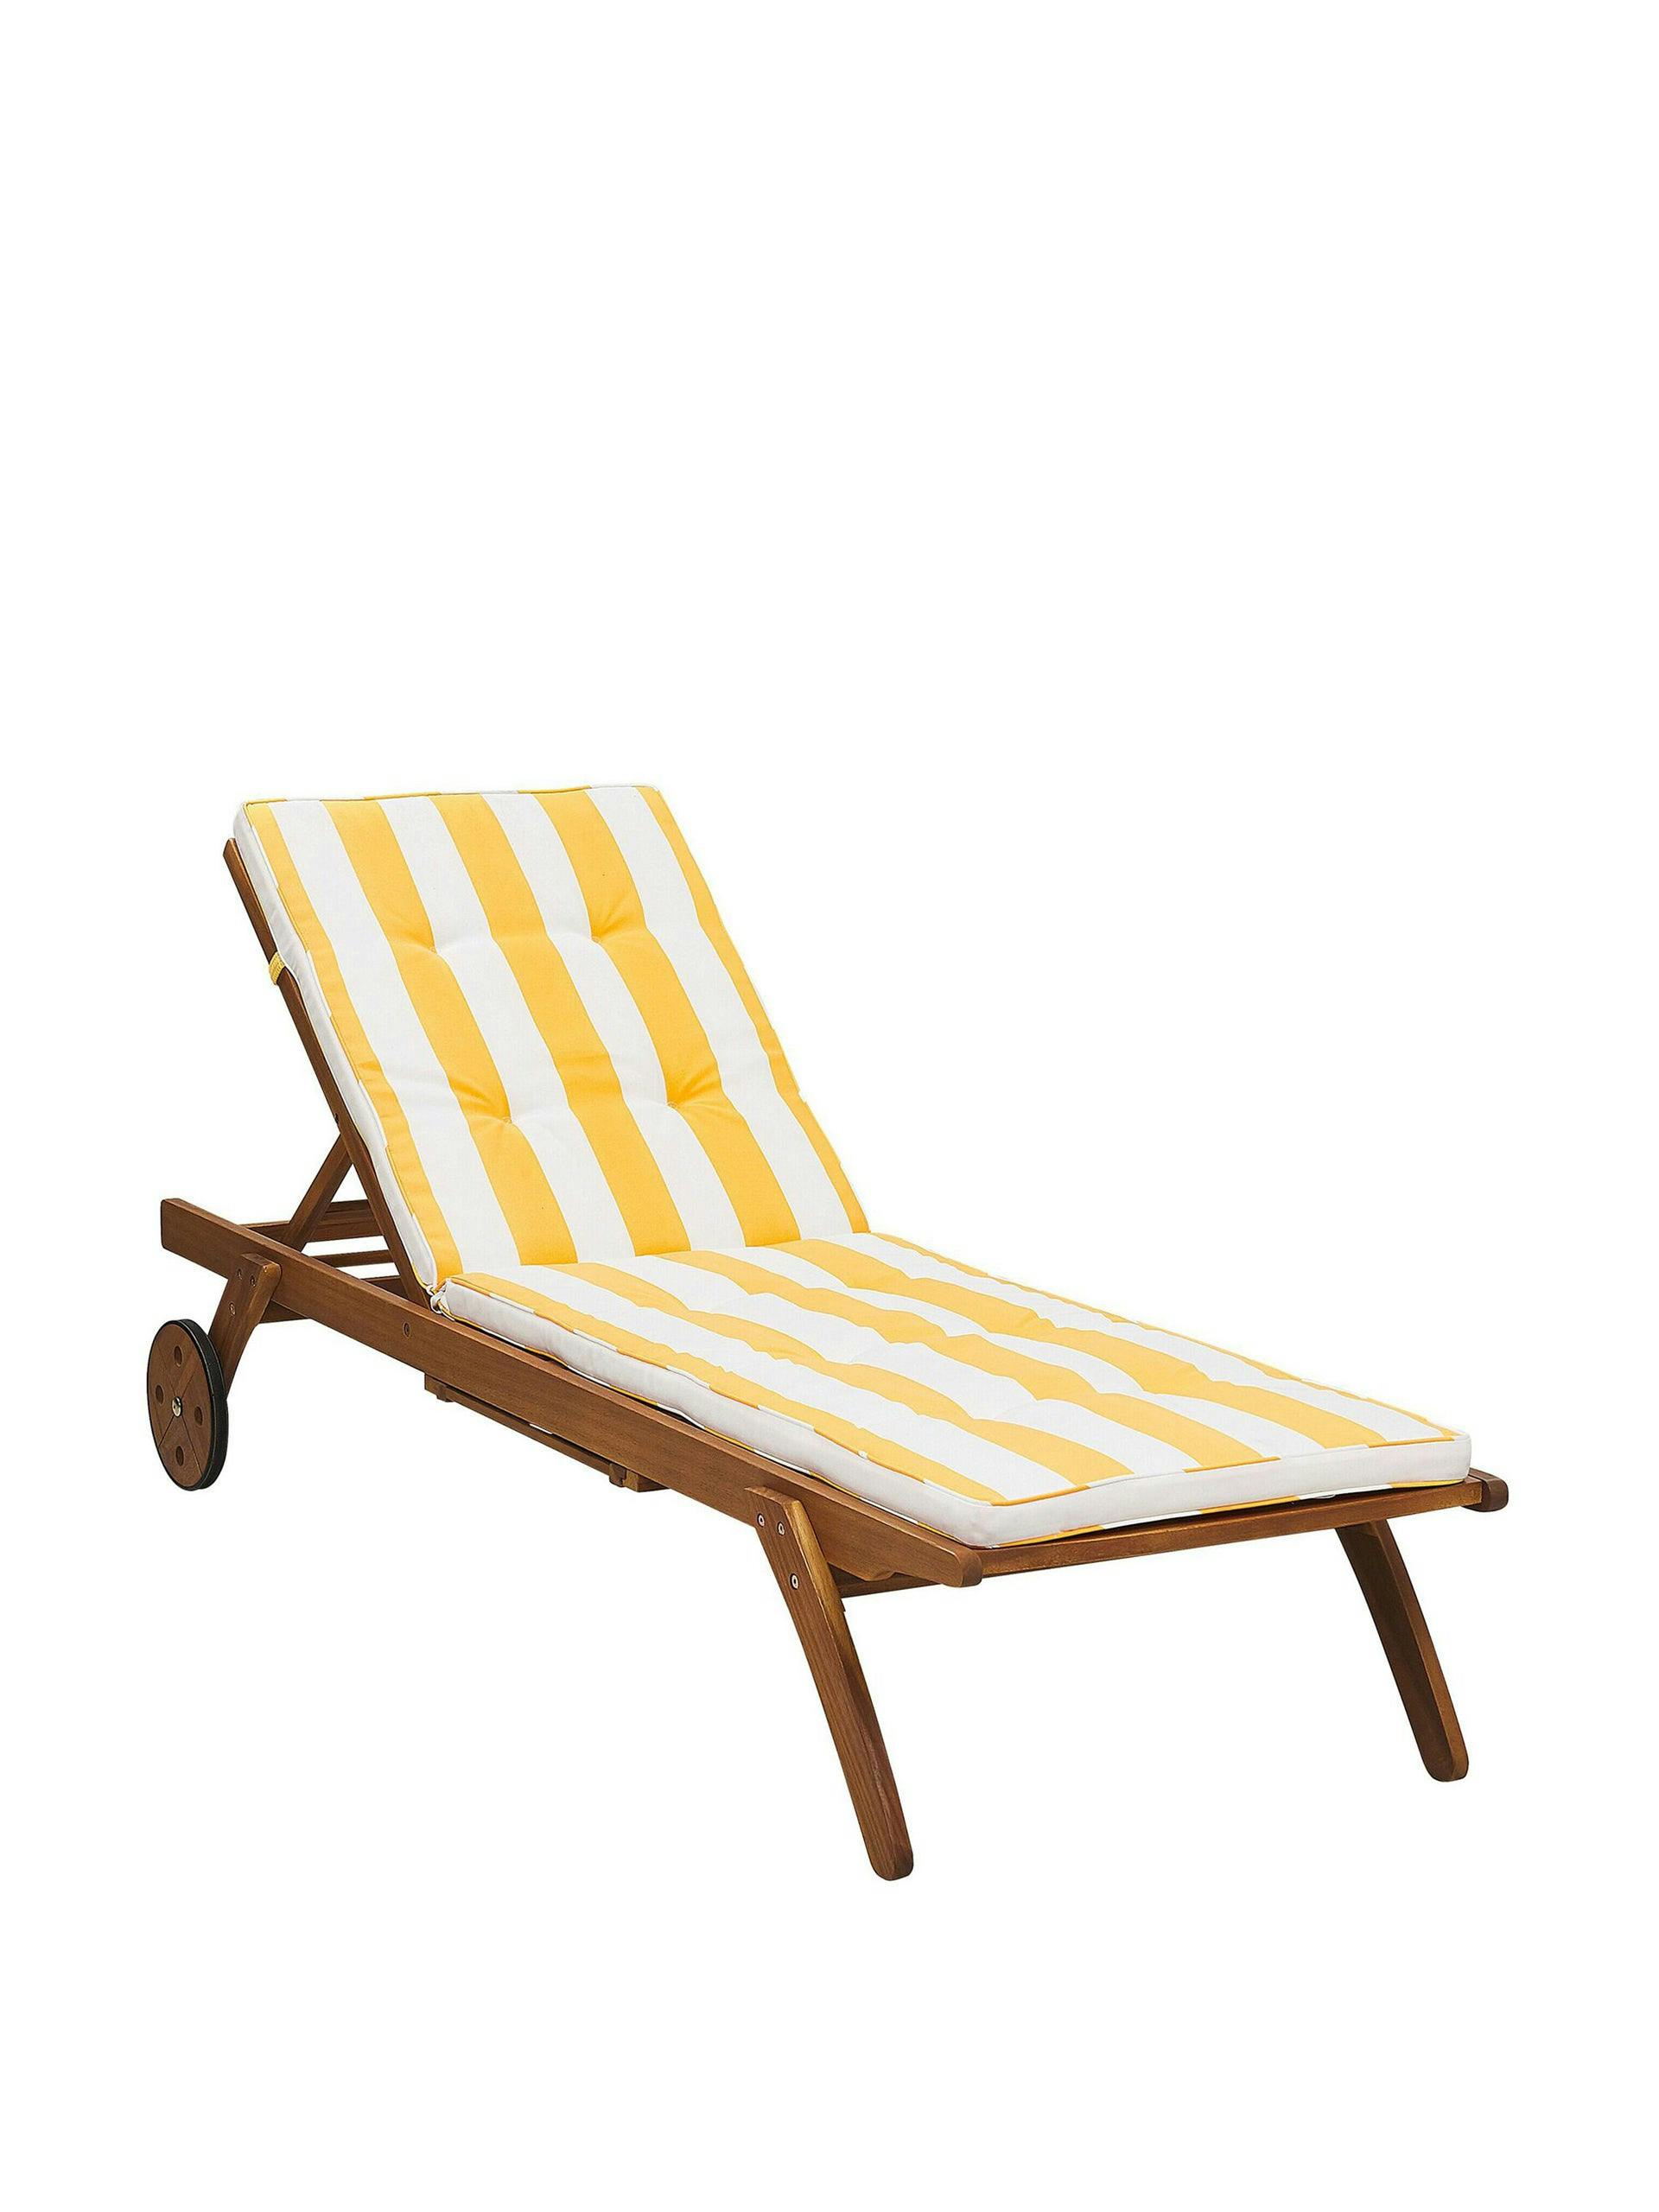 Reclining sun lounger with yellow stripe cushion